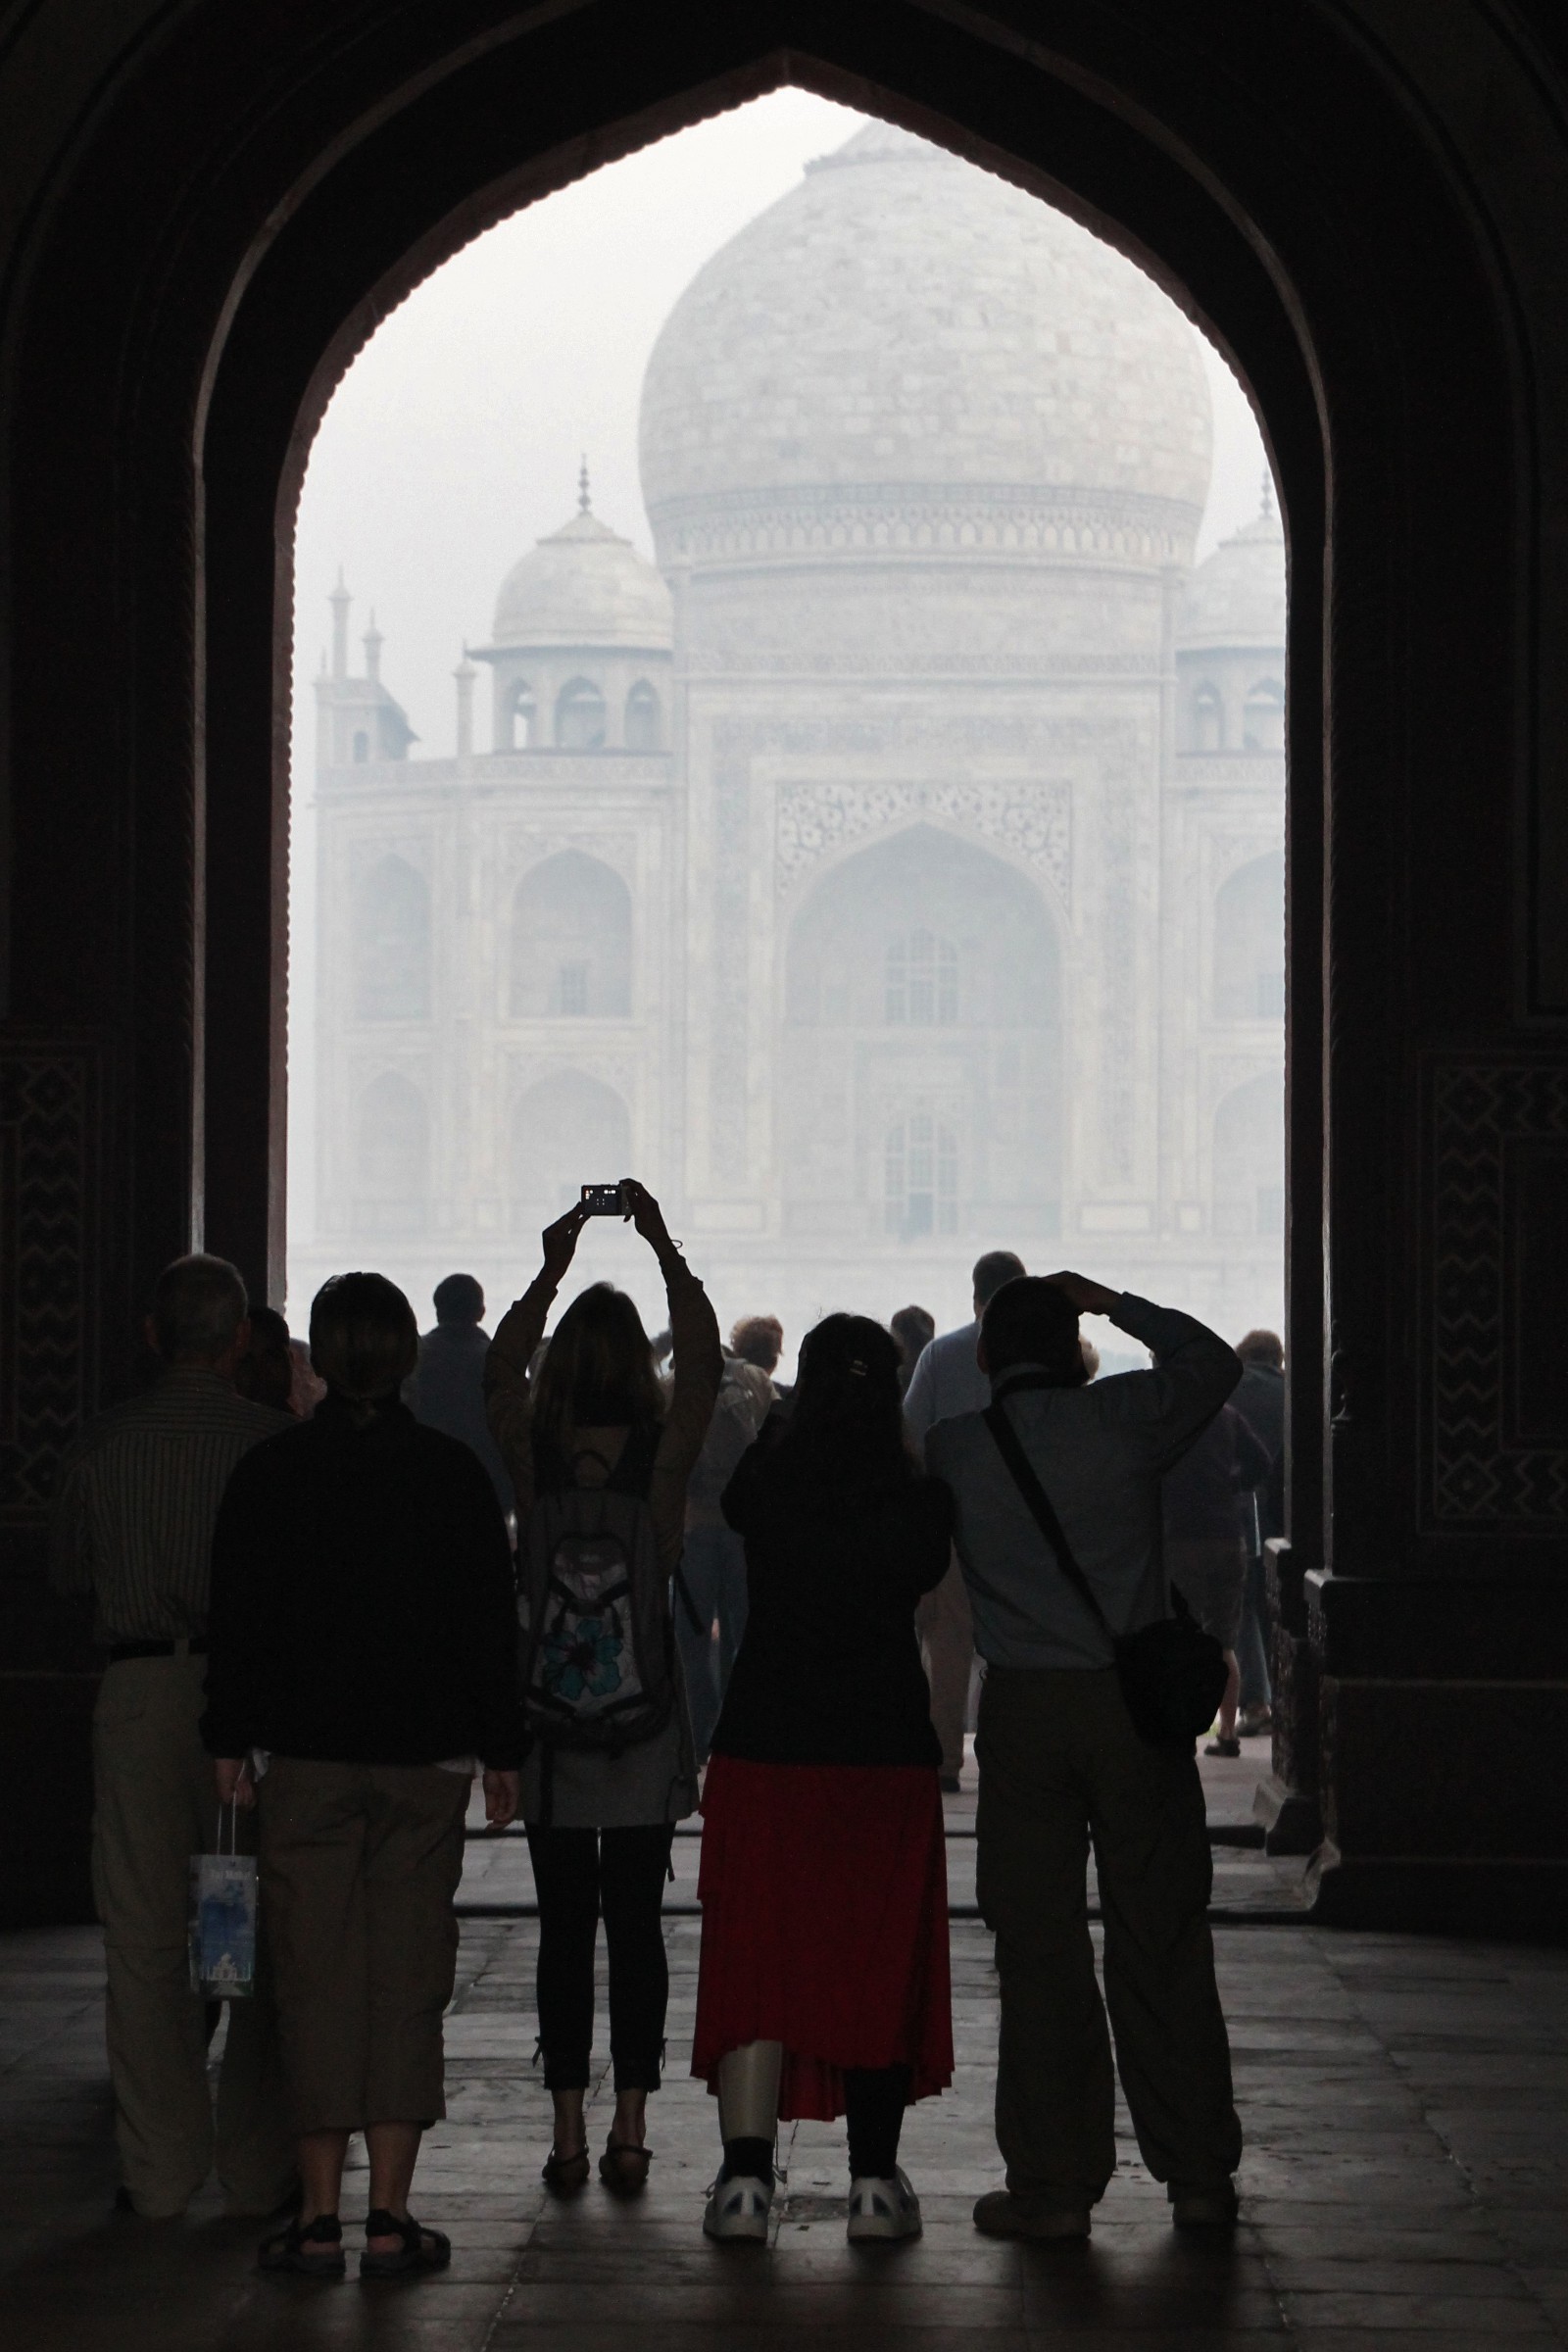 Tourists photograph the Taj Mahal through the complex's Great Gate at sunrise.